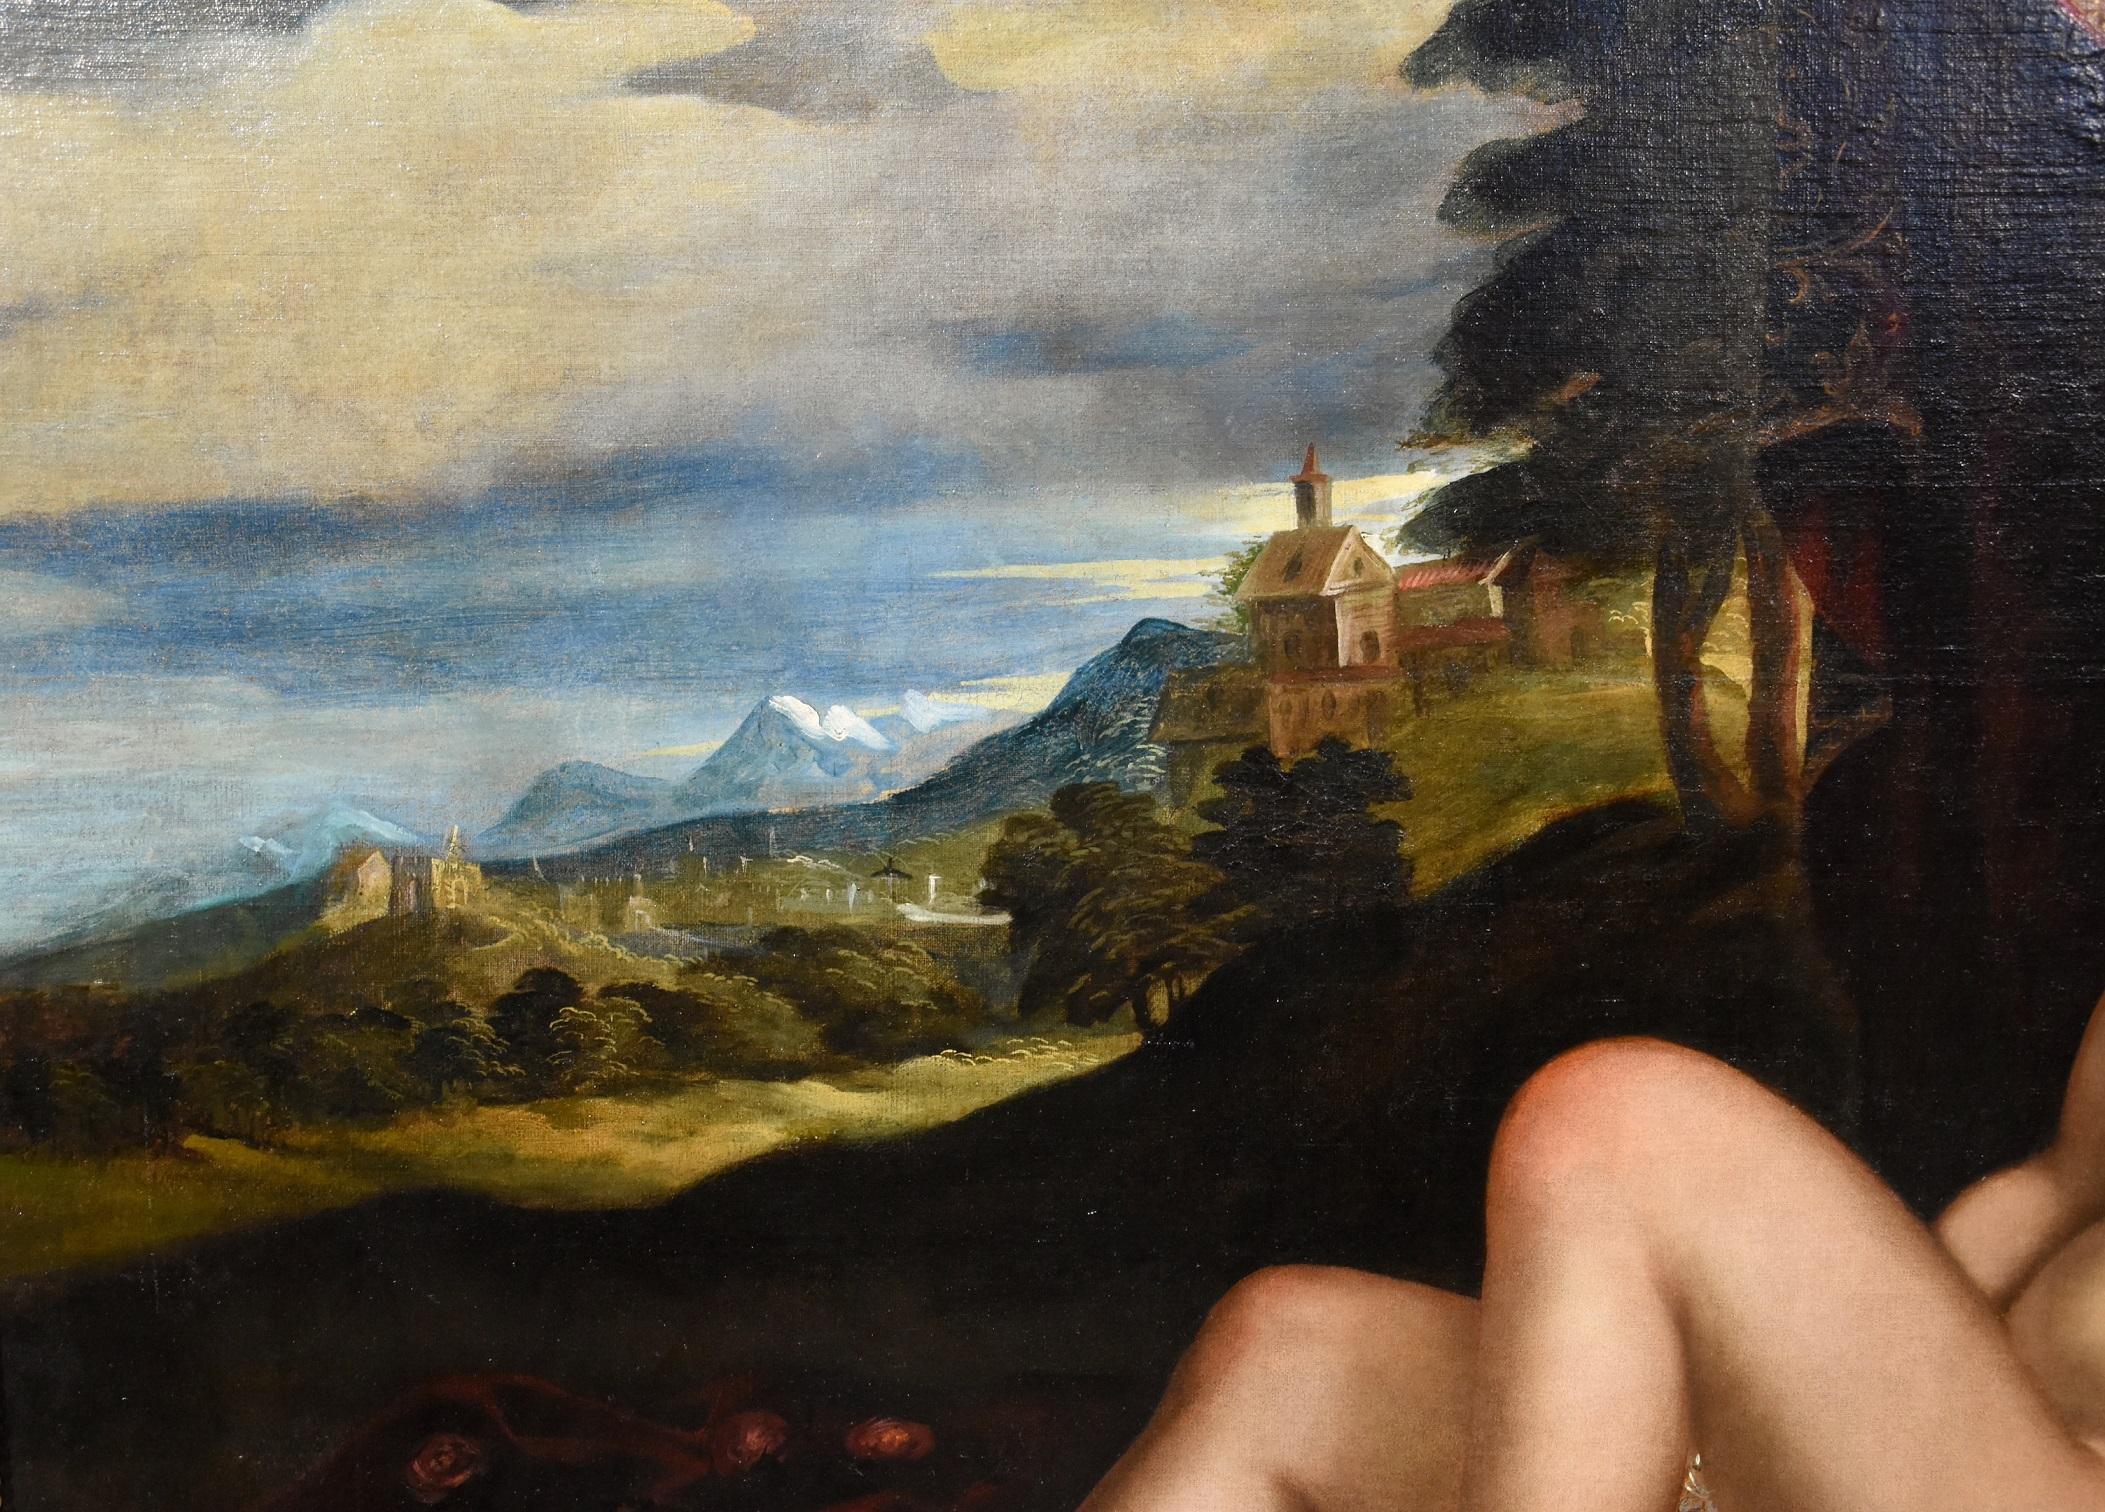 Venus Paolo Fiammingo Paint Oil on canvas Old master 16th Century Italian Art For Sale 2